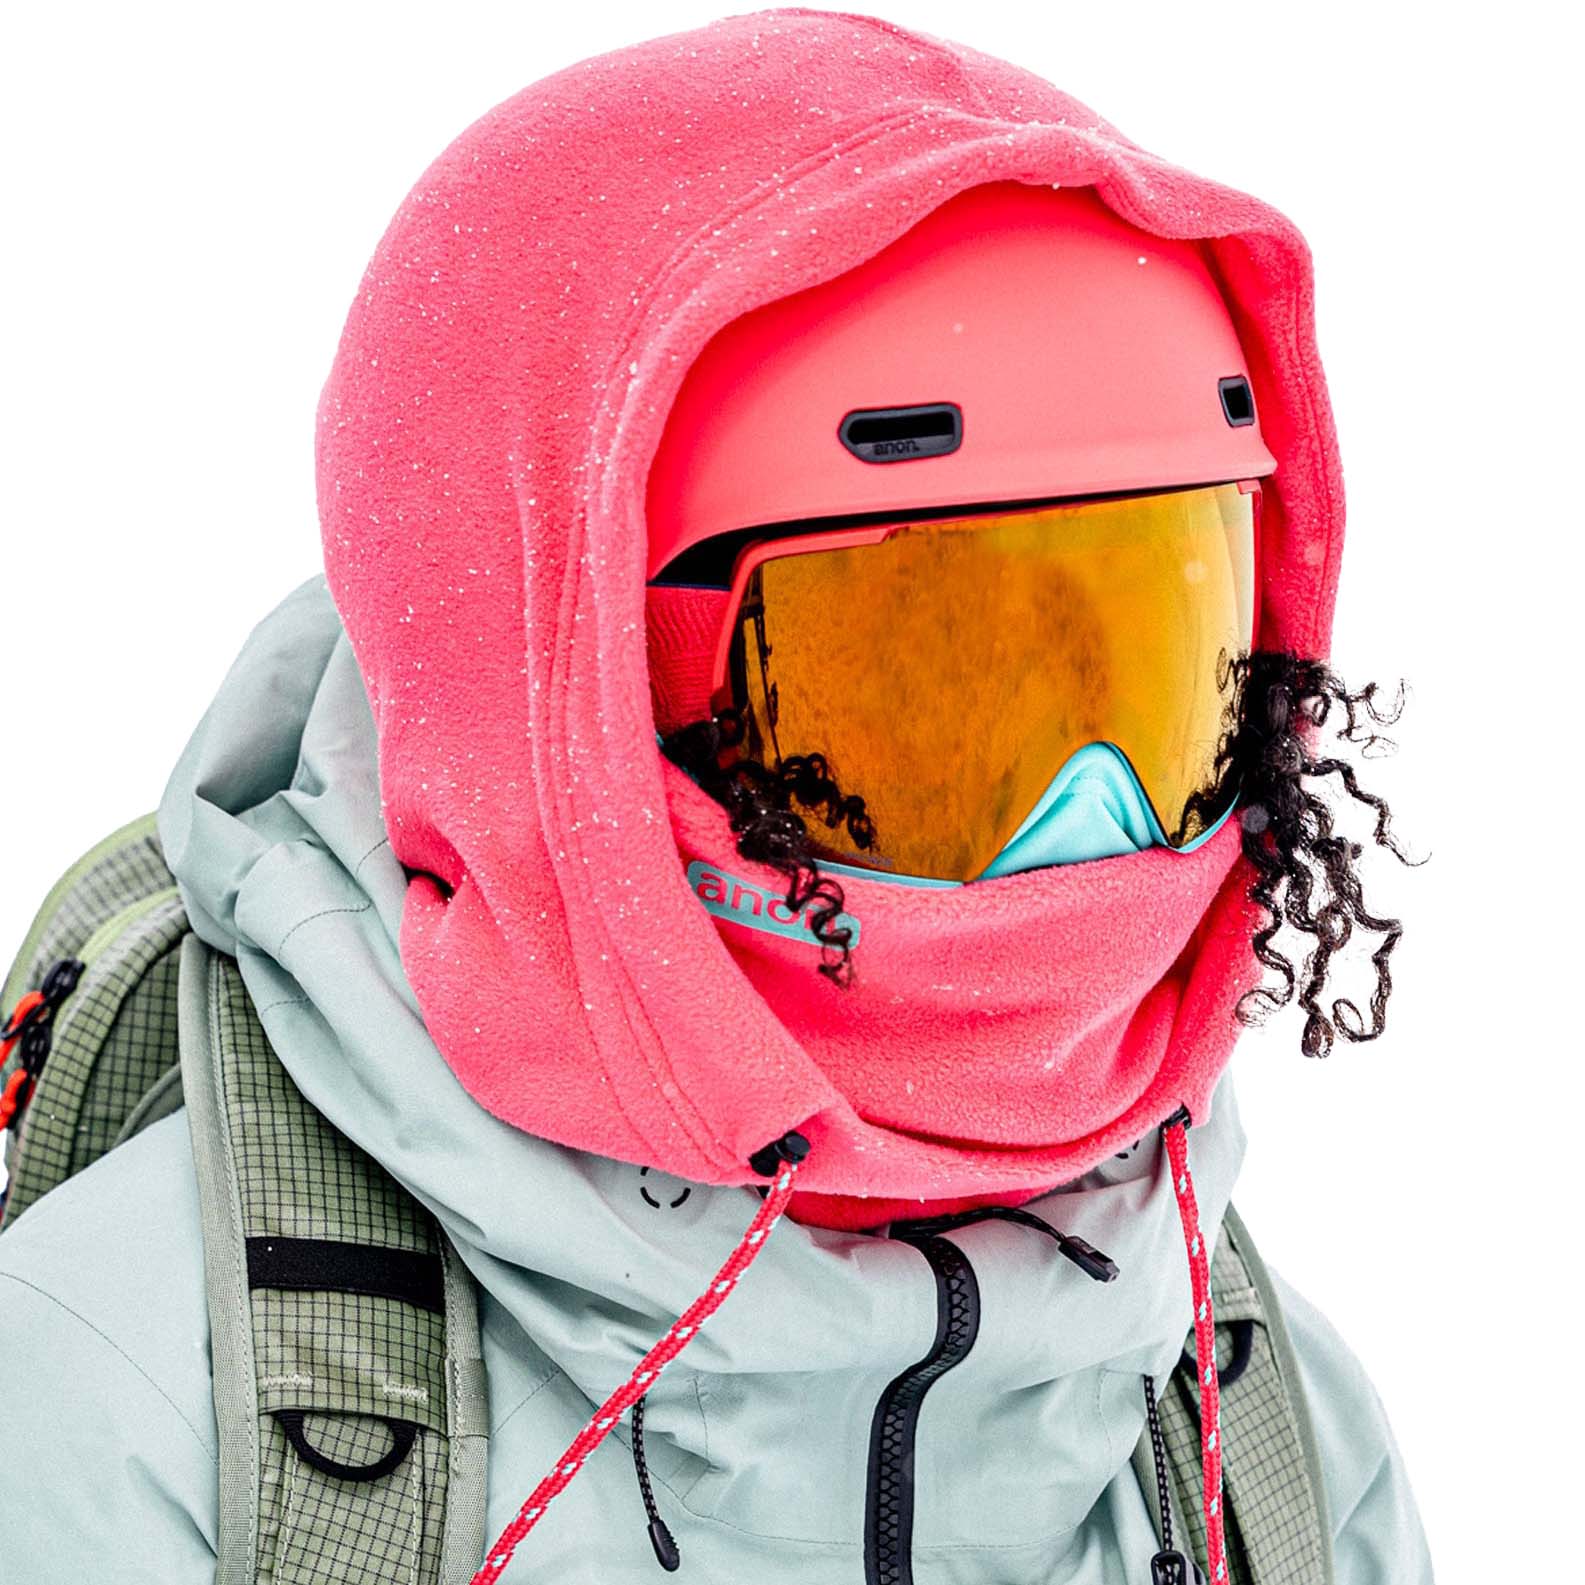 Anon M5 Flat-Toric Ski/Snowboard Goggles + MFI Face Mask